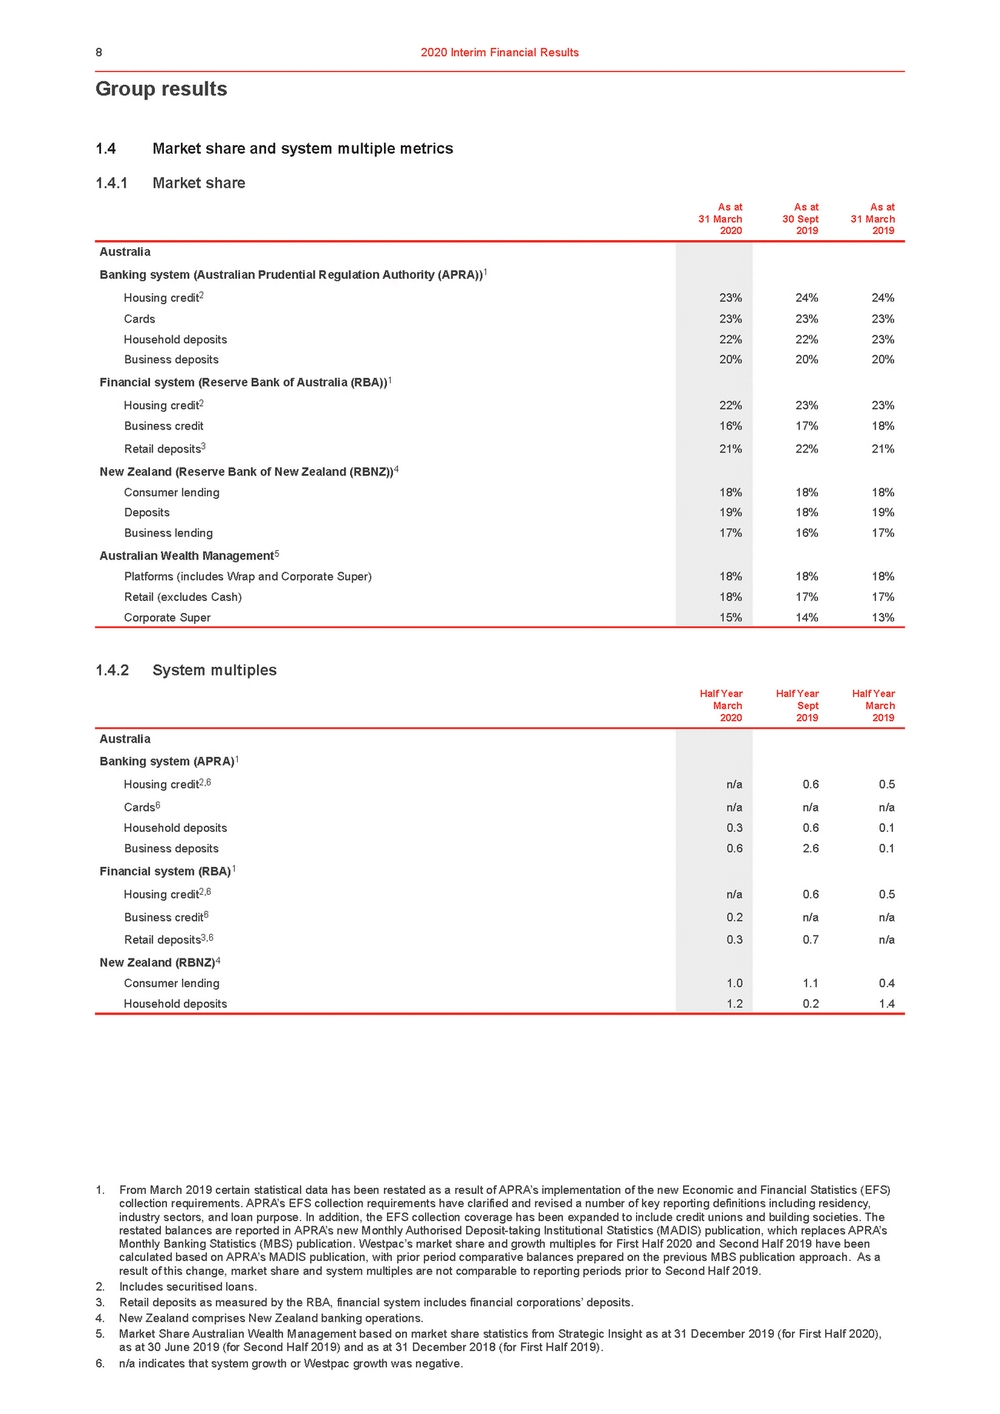 11676-3-ex1_westpac 2020 interim financial results announcement_page_013.jpg